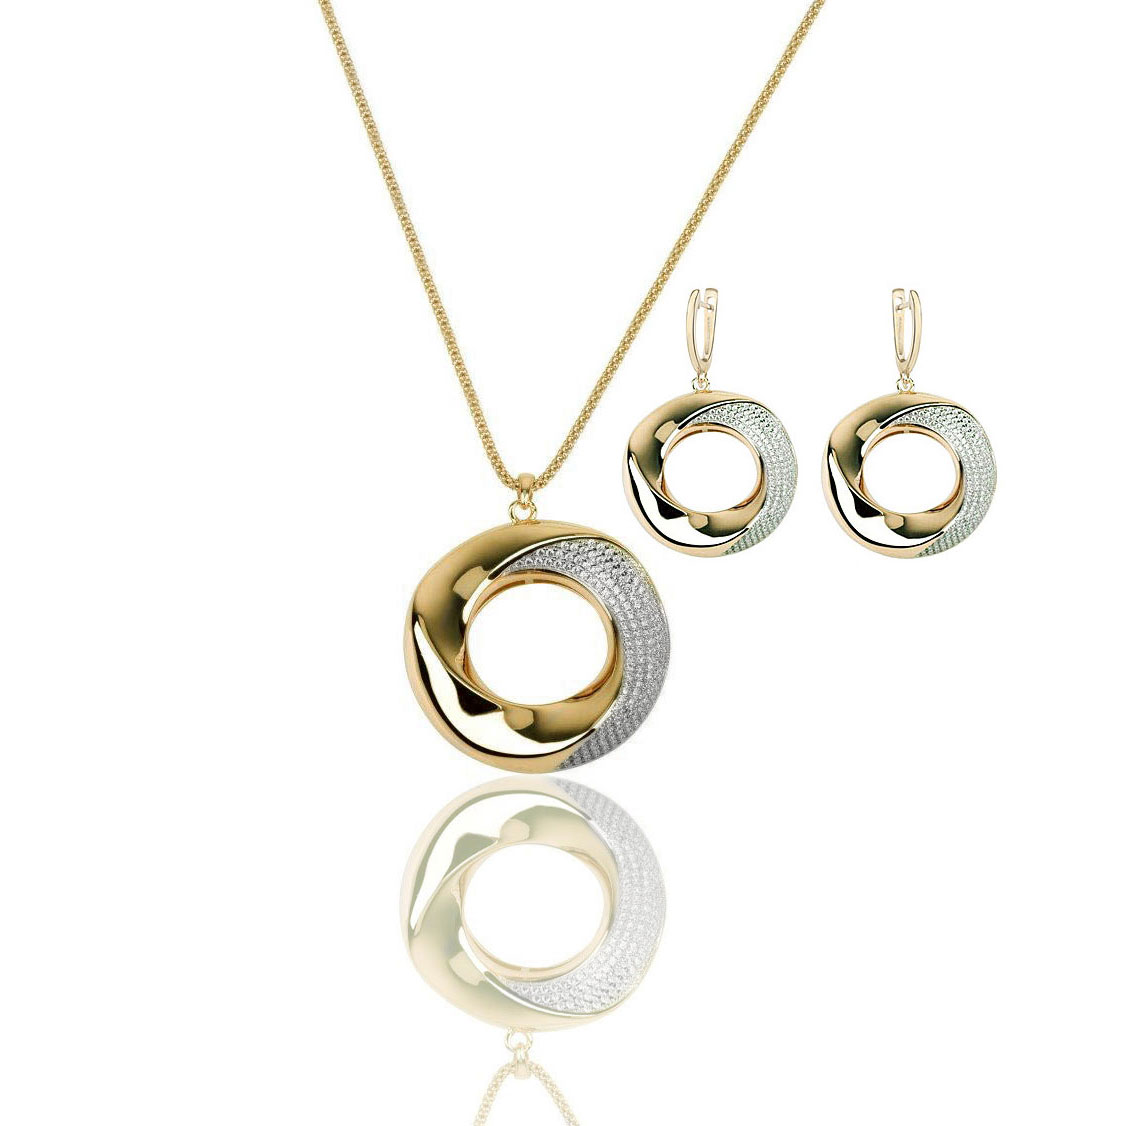 Cashs Ireland Bond 18k Gold Pendant Necklace and Earrings Gift Set